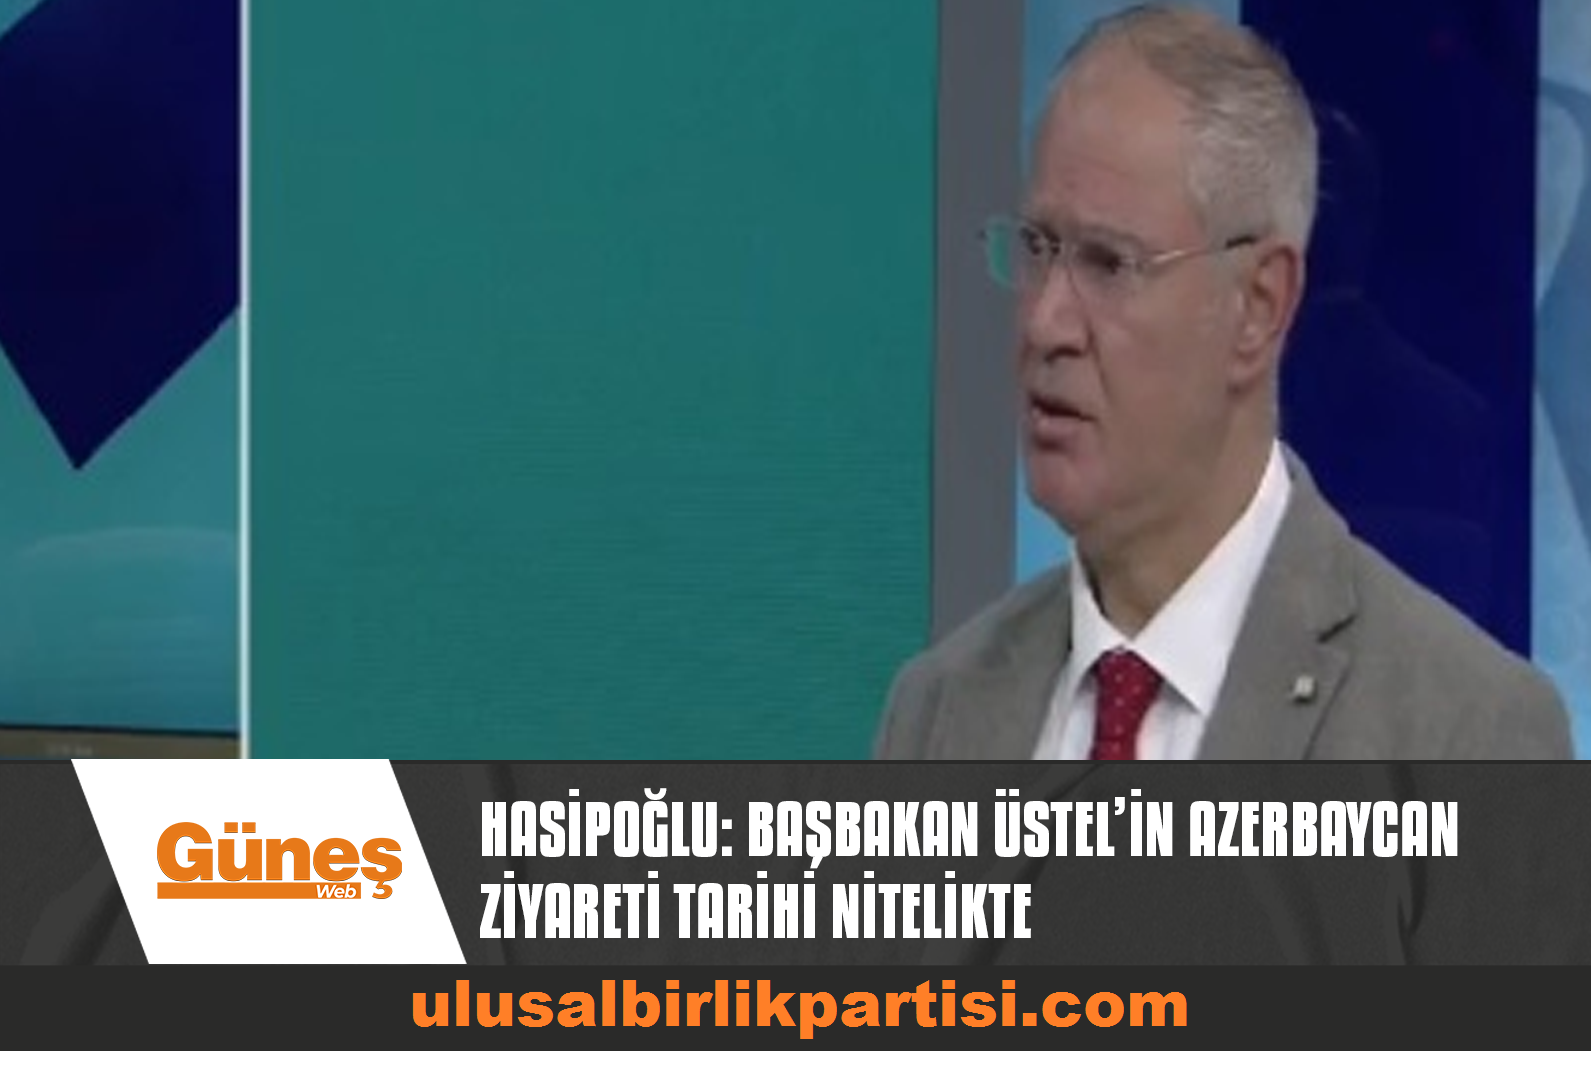 You are currently viewing Hasipoğlu: Başbakan Üstel’in Azerbaycan ziyareti tarihi nitelikte